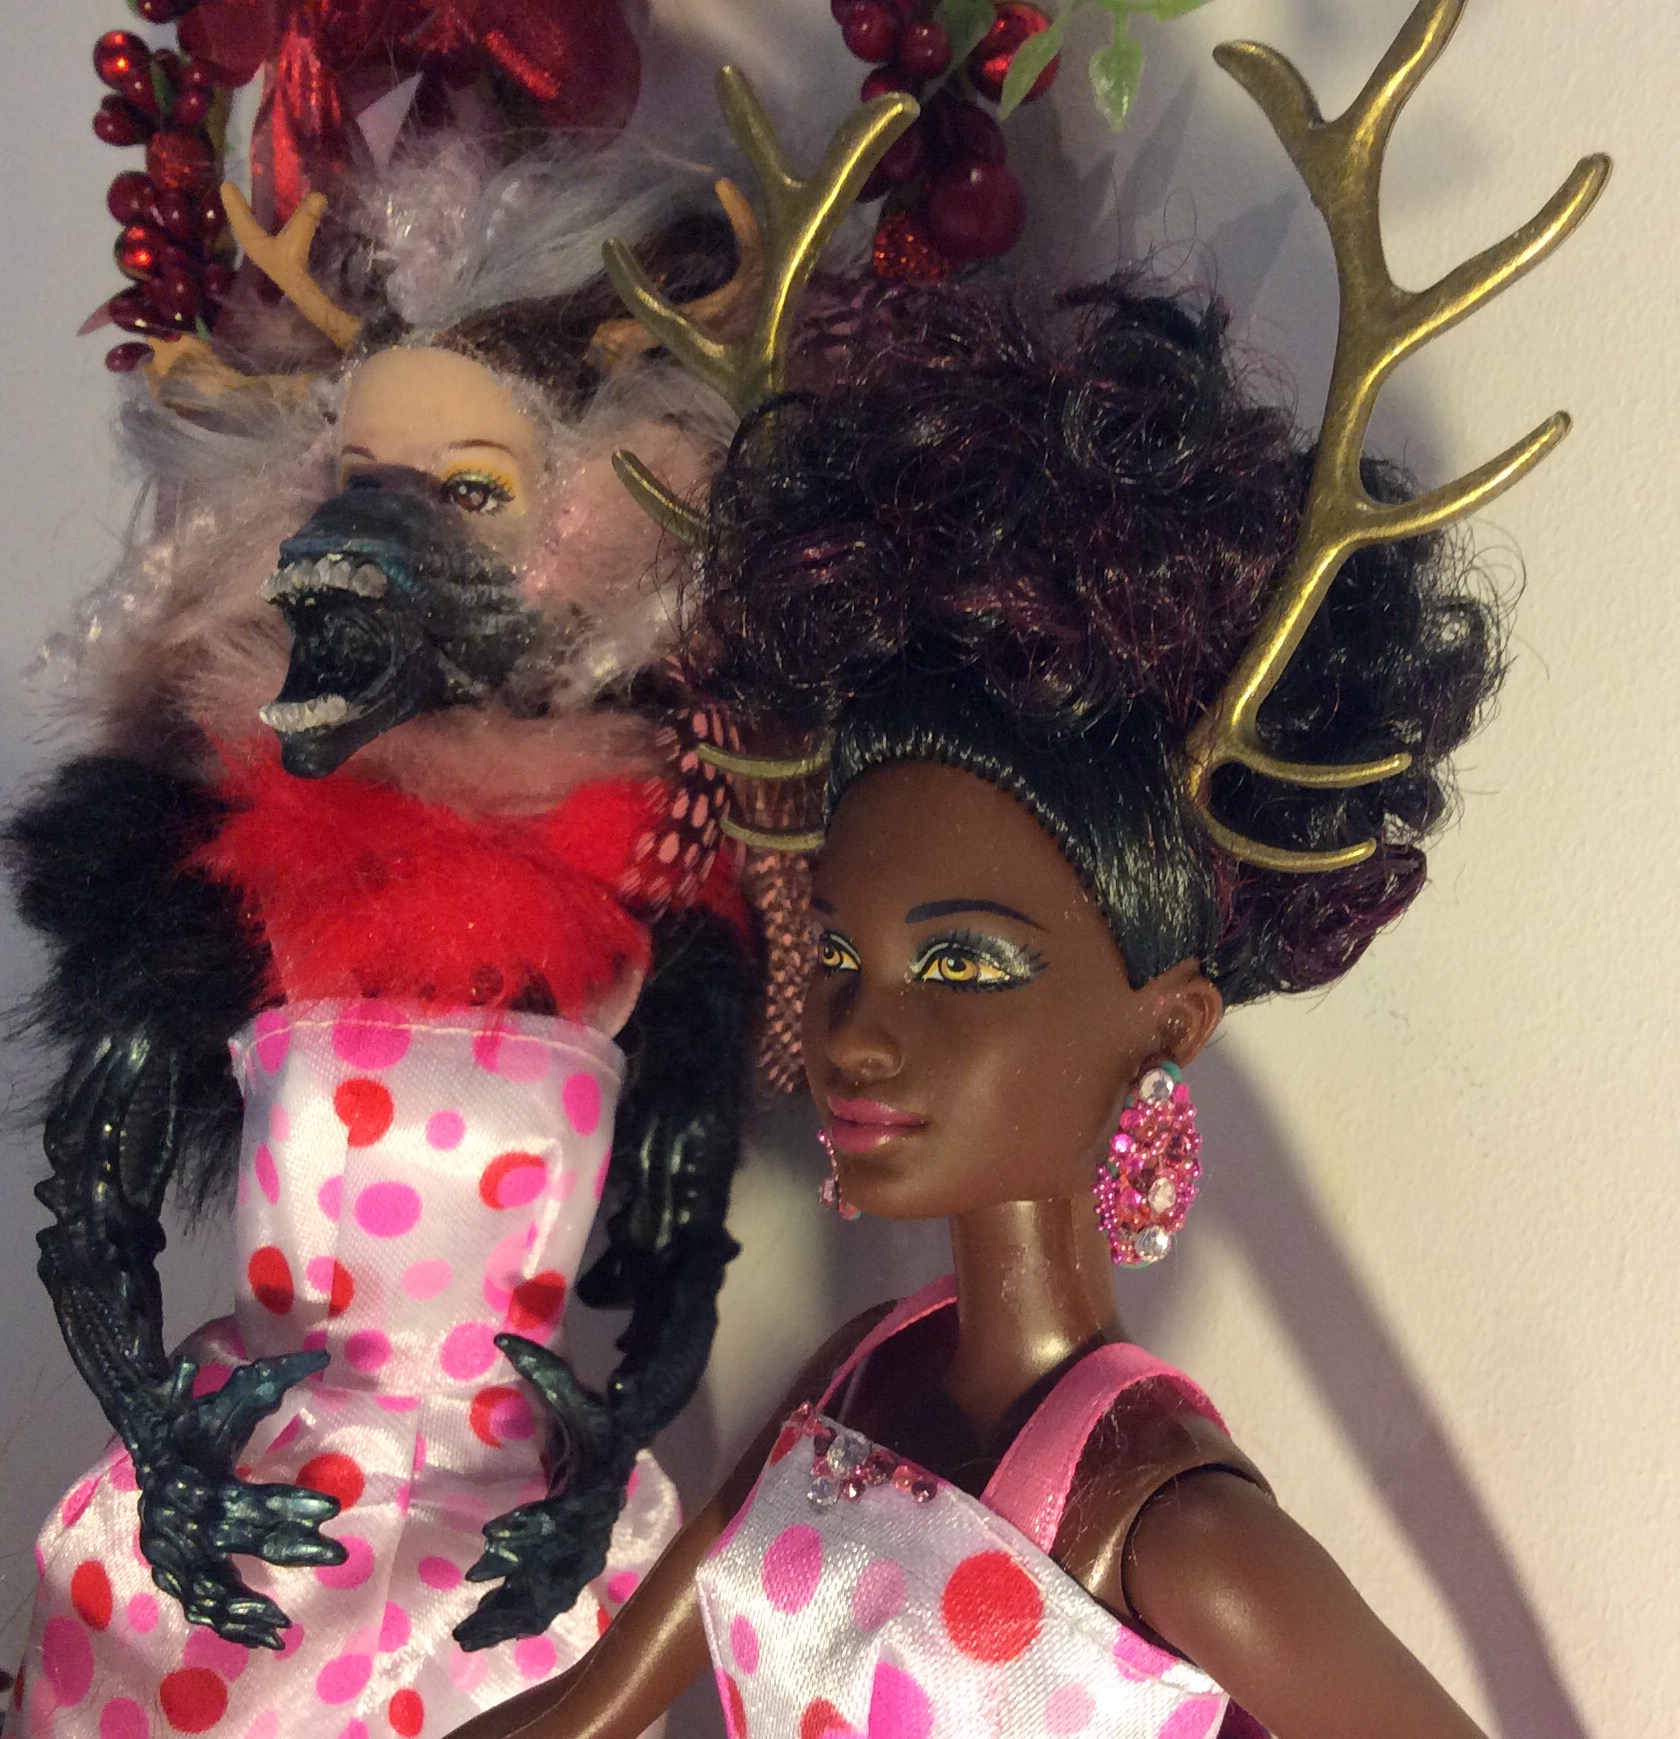 Baphomet doll barbie Mattel Brands: